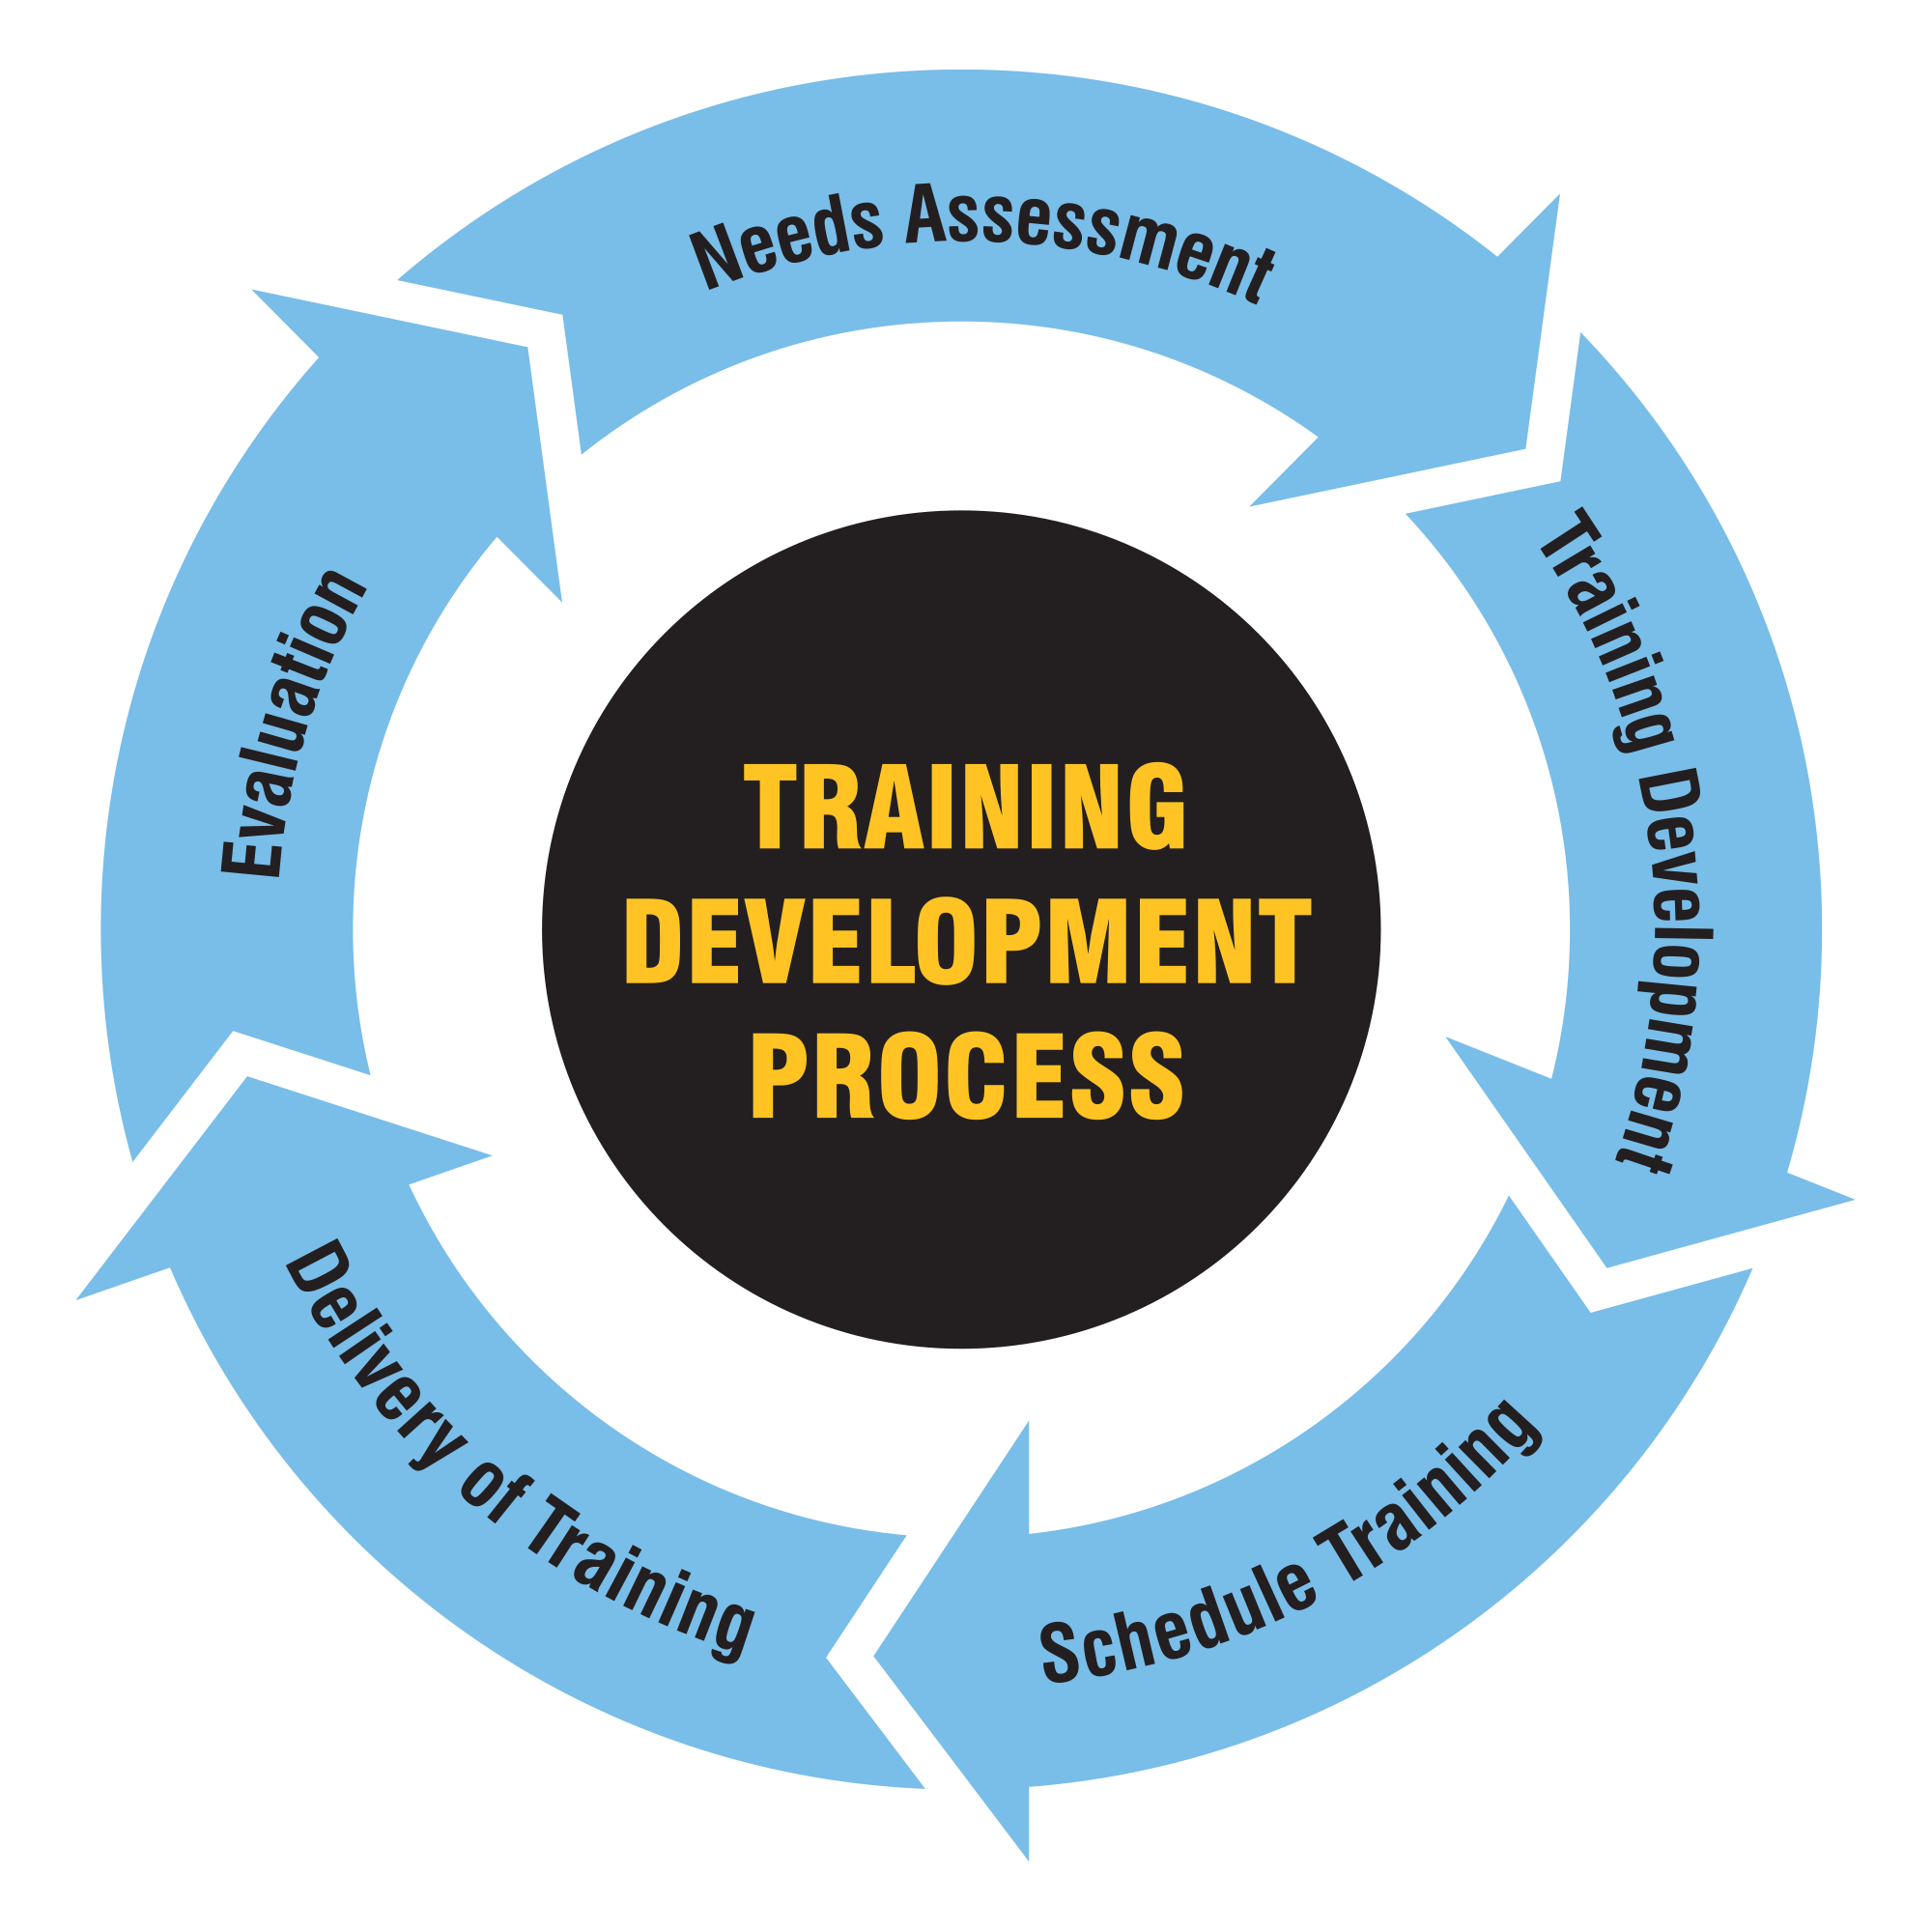 Training Development Process Infographic